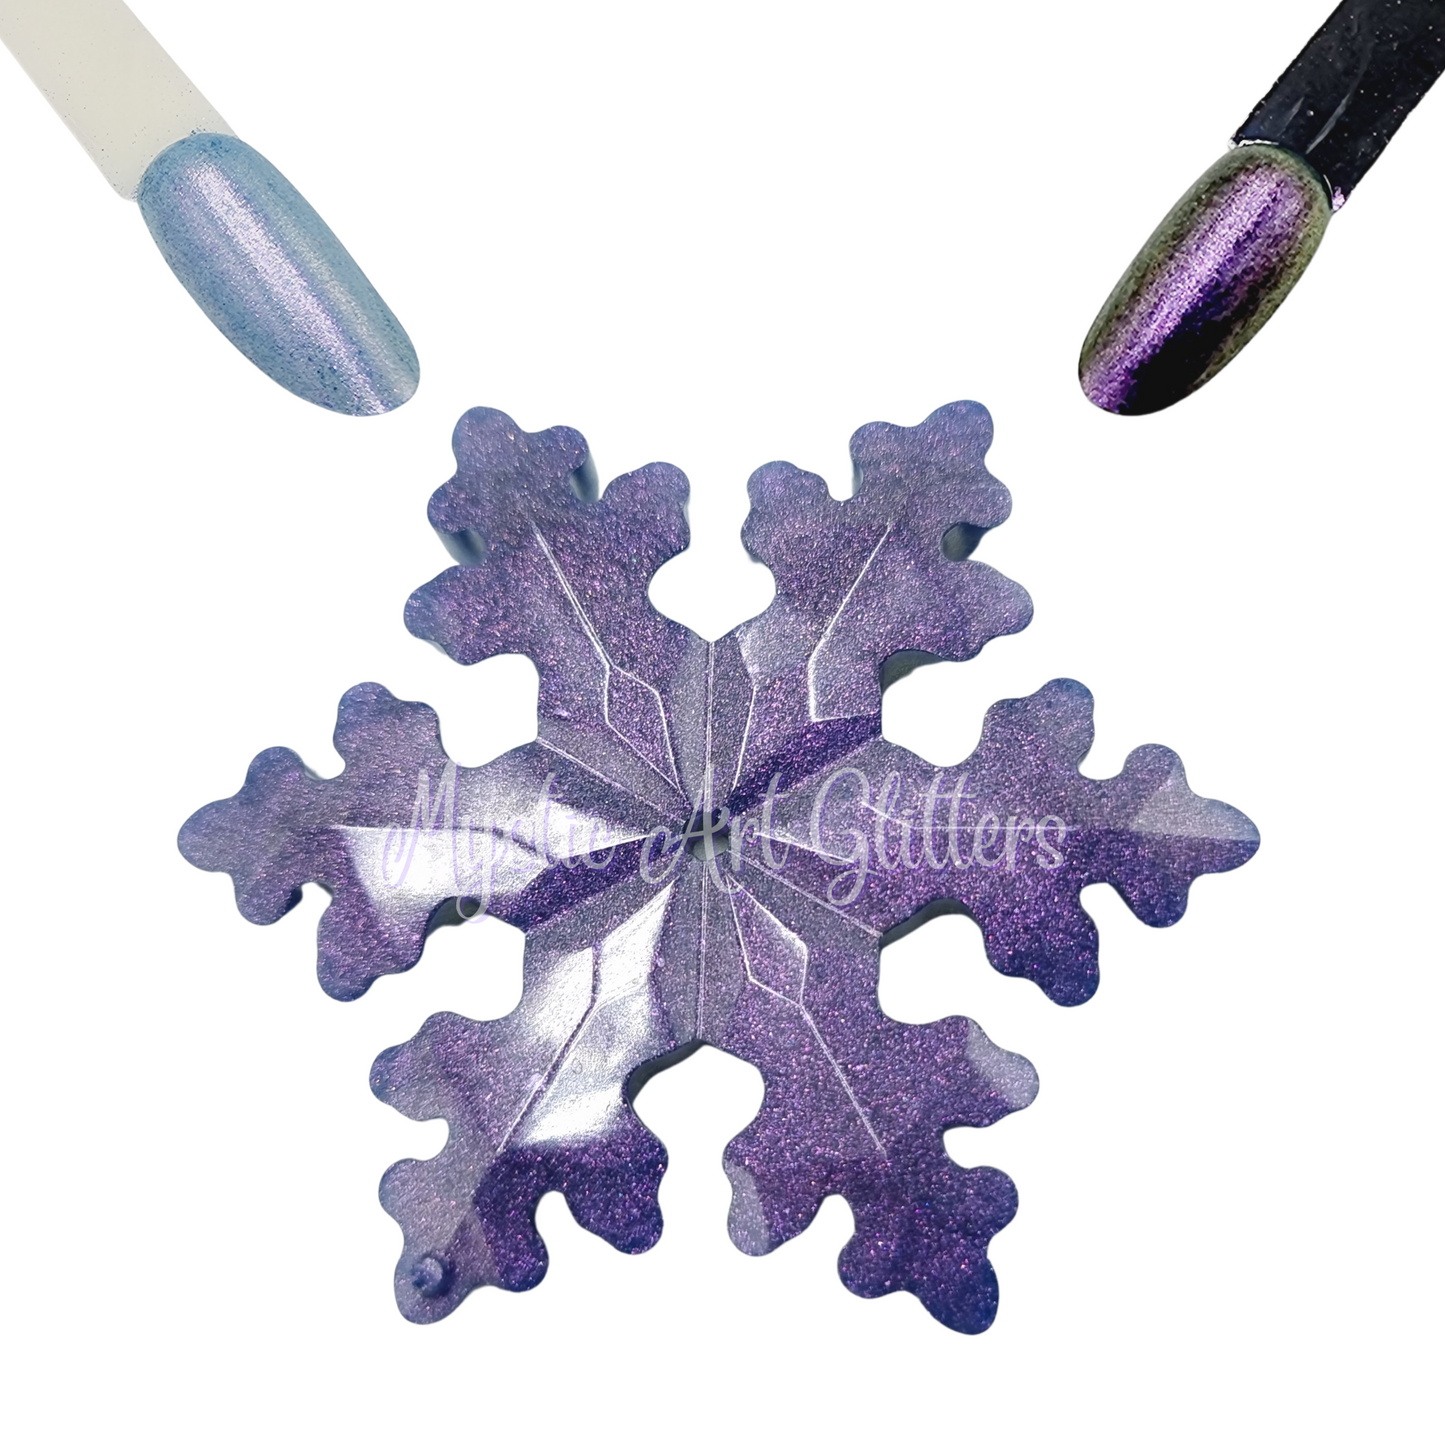 Blue + Purple Sparkles Mica Powder 14gm